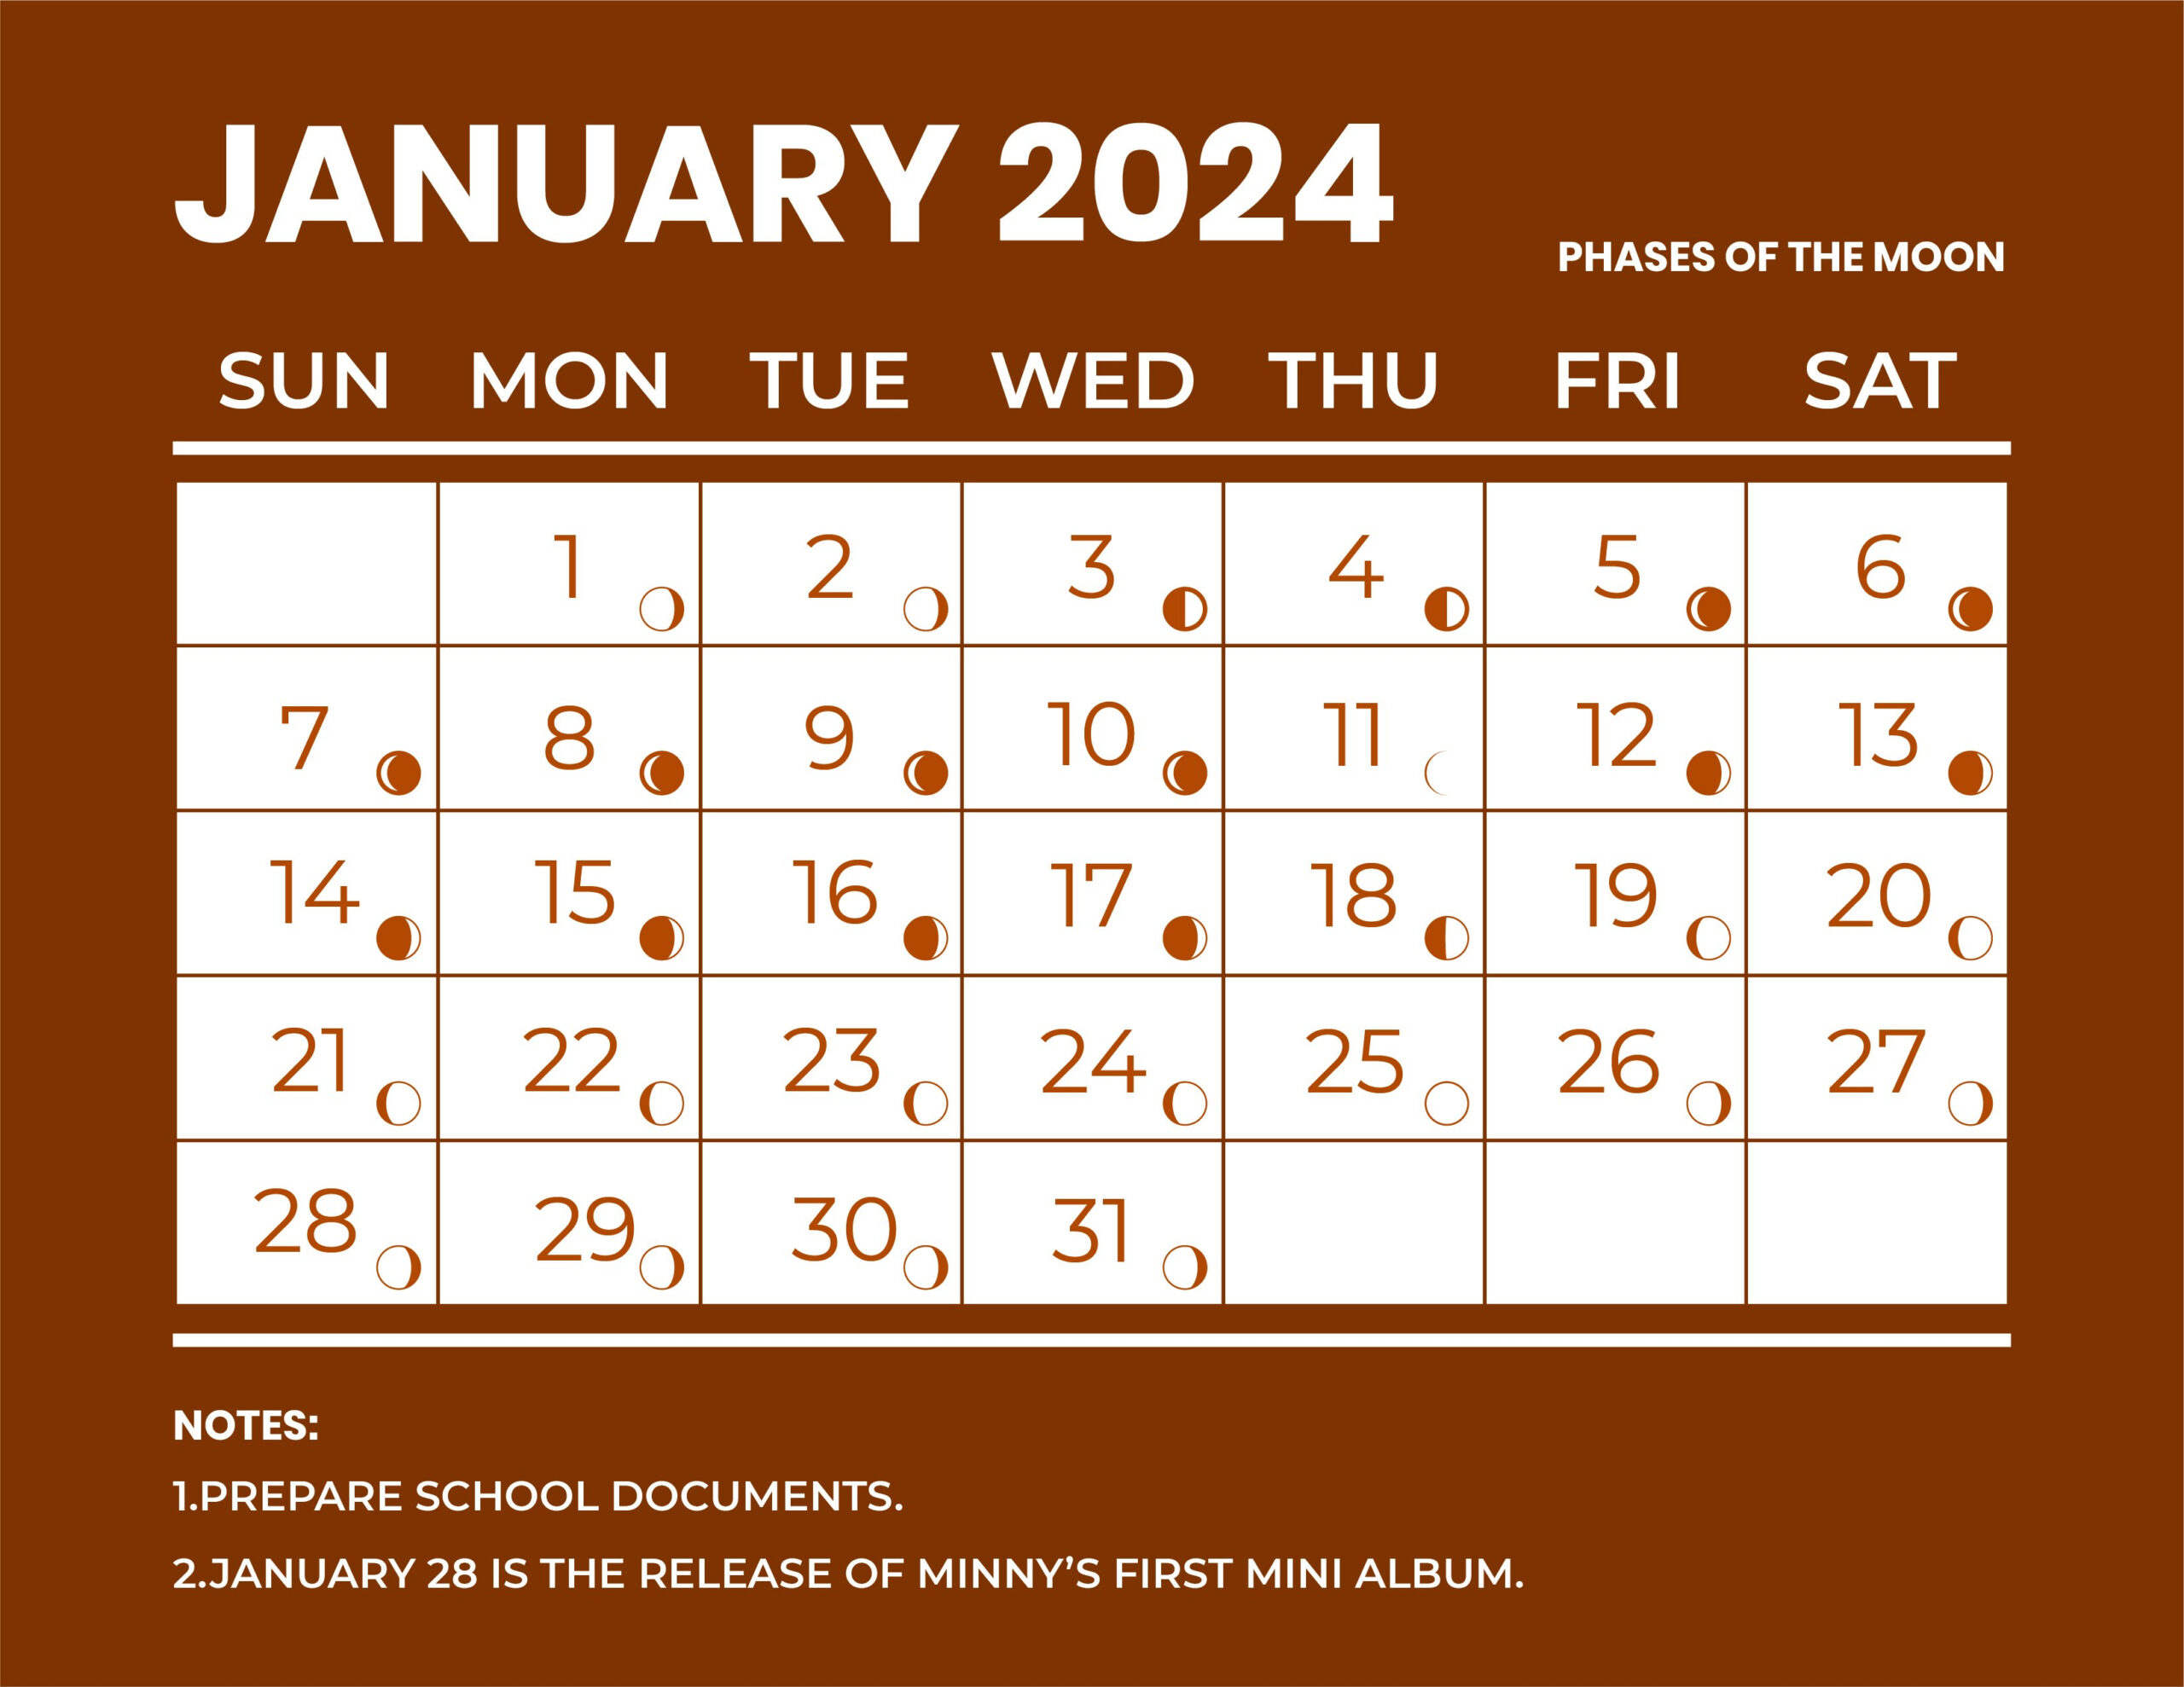 January 2024 Calendar With Moon Phases - Word, Illustrator, Eps for Free Printable 2024 Lunar Calendar